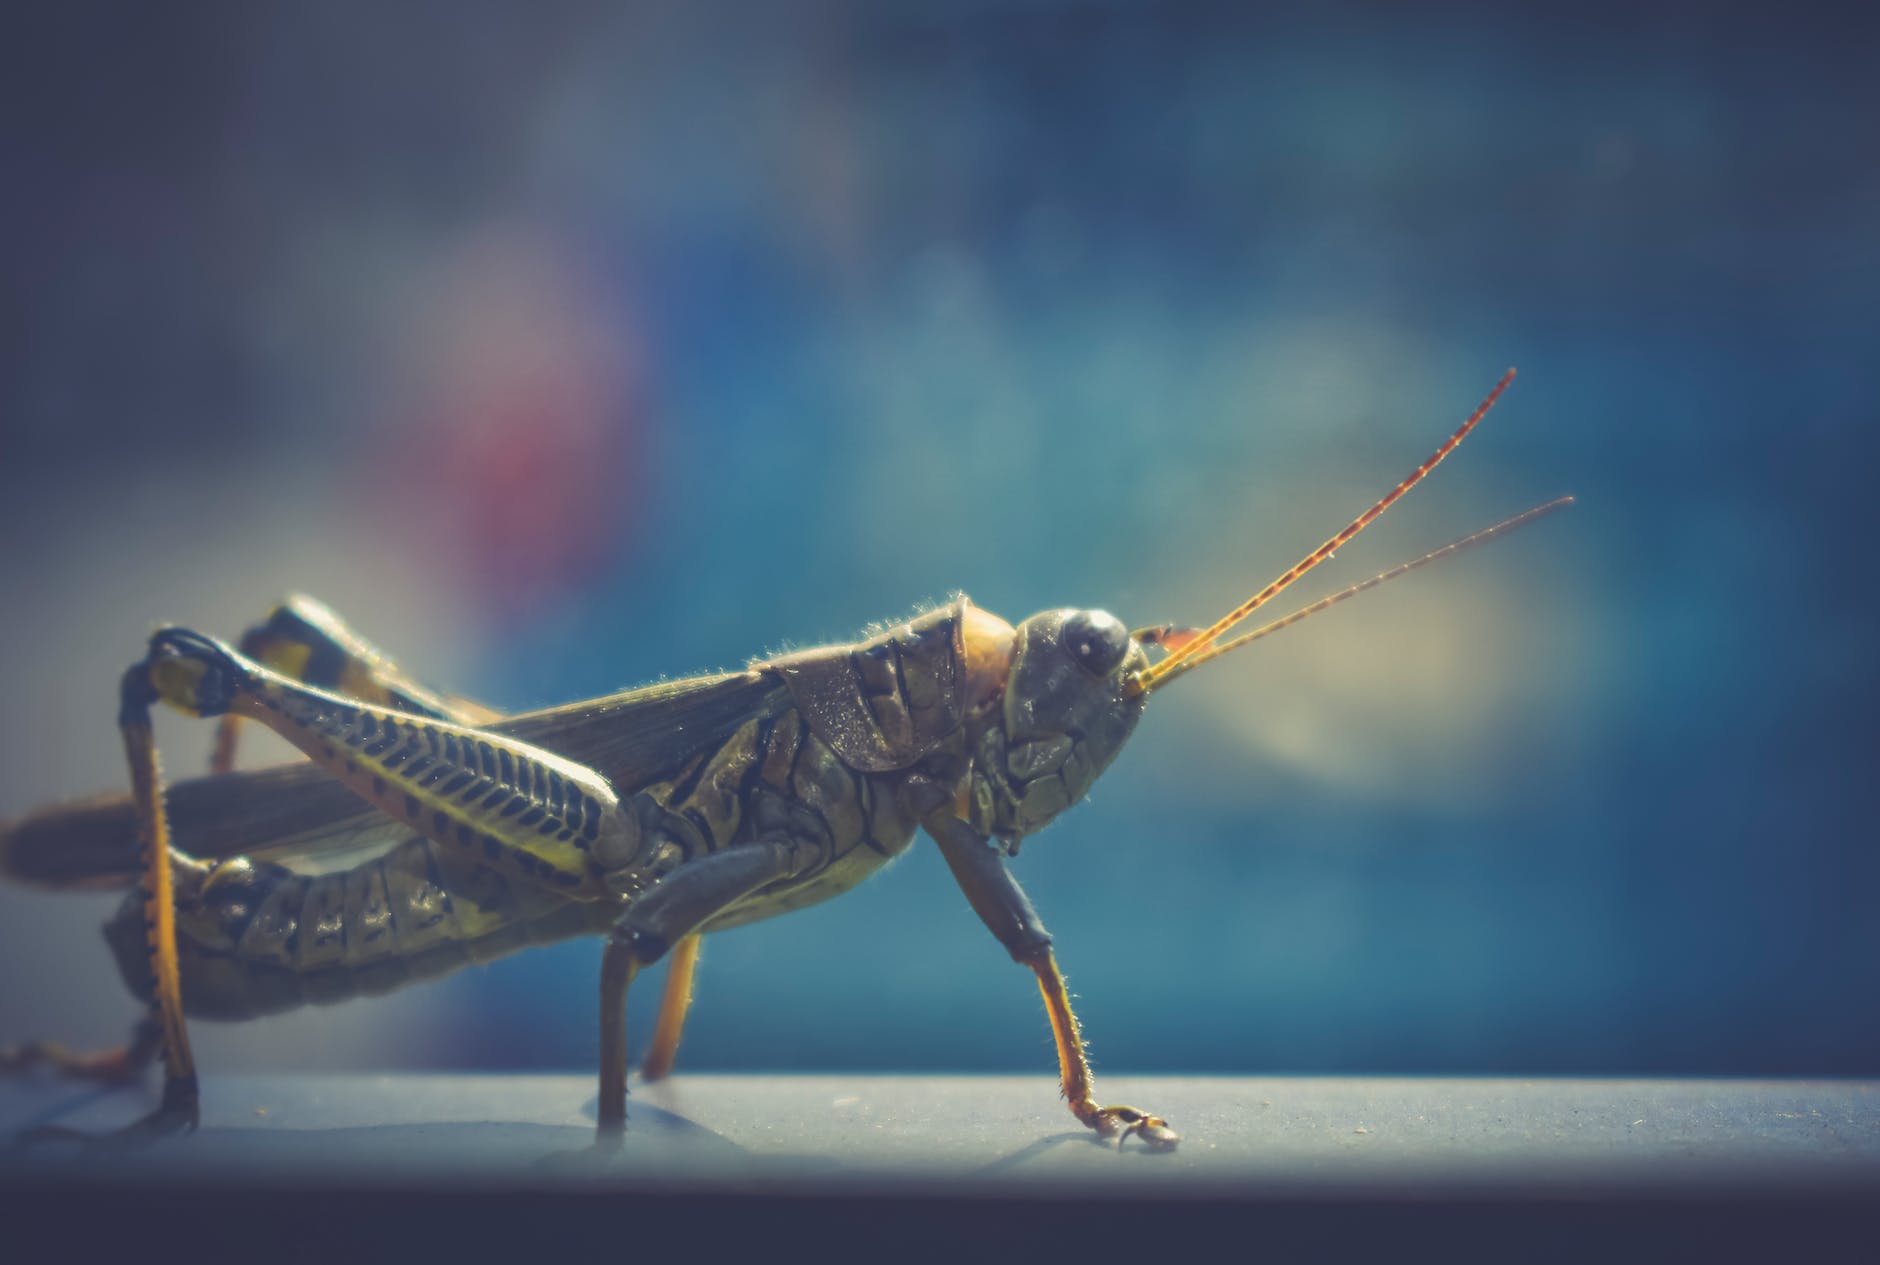 schistocerca americana locust crawling on white surface